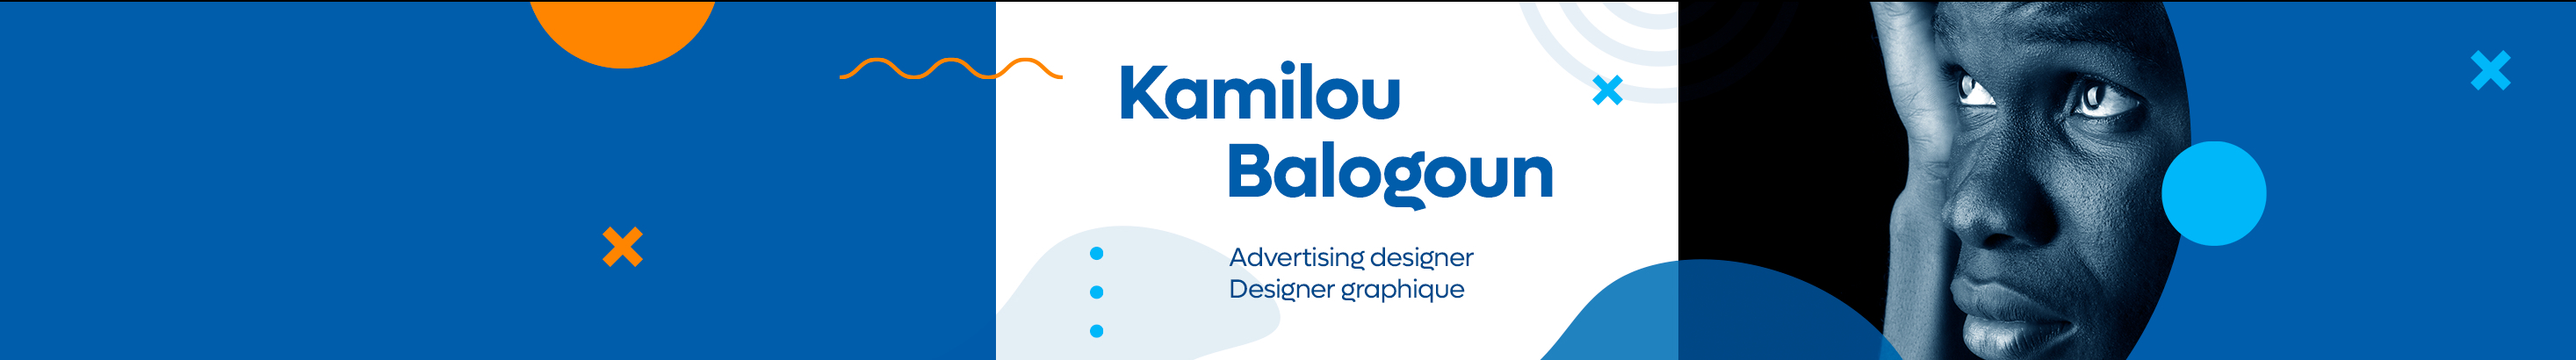 Banner profilu uživatele Kamilou Balogoun